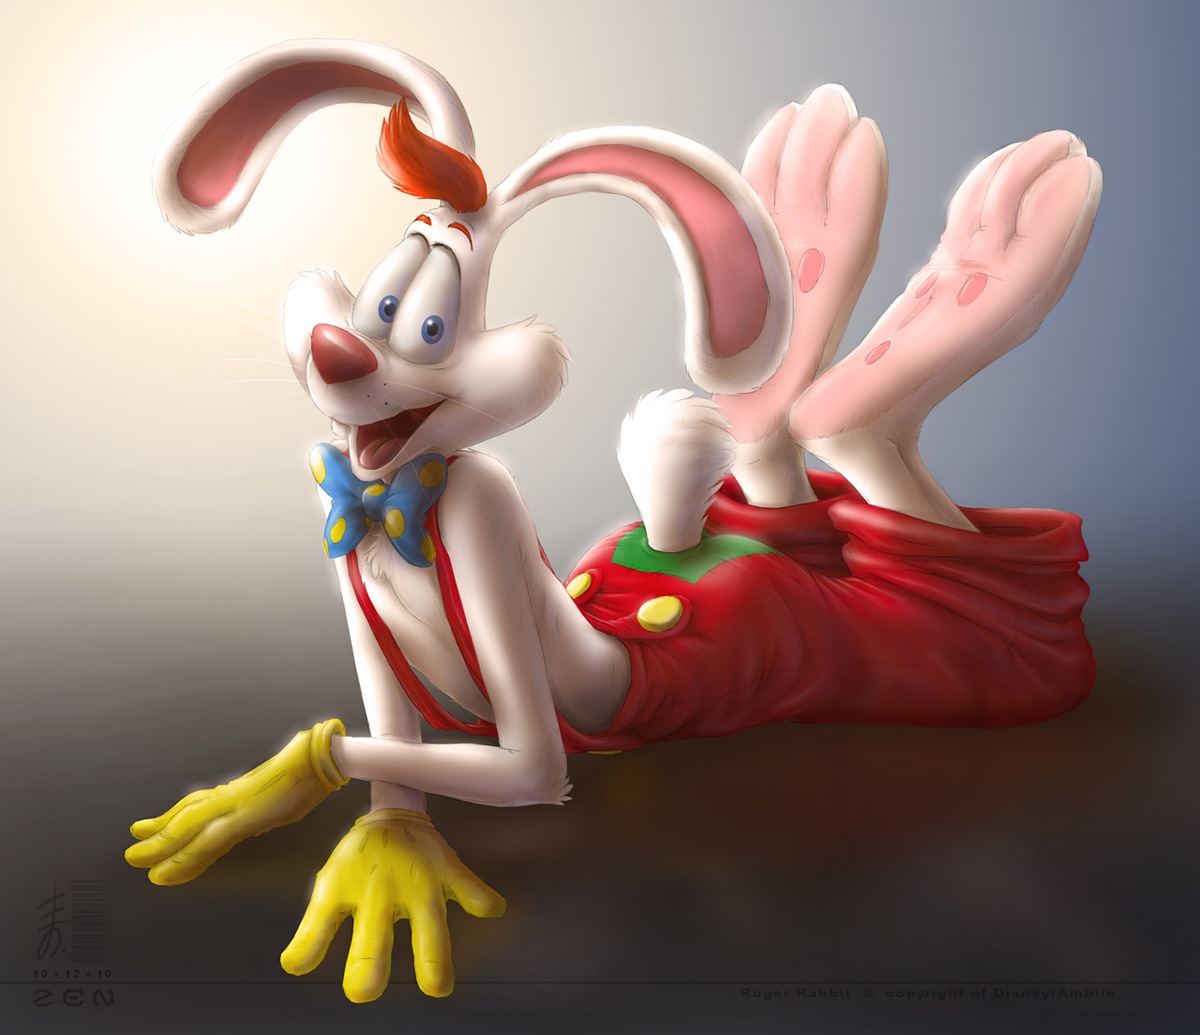 Roger rabbit characters